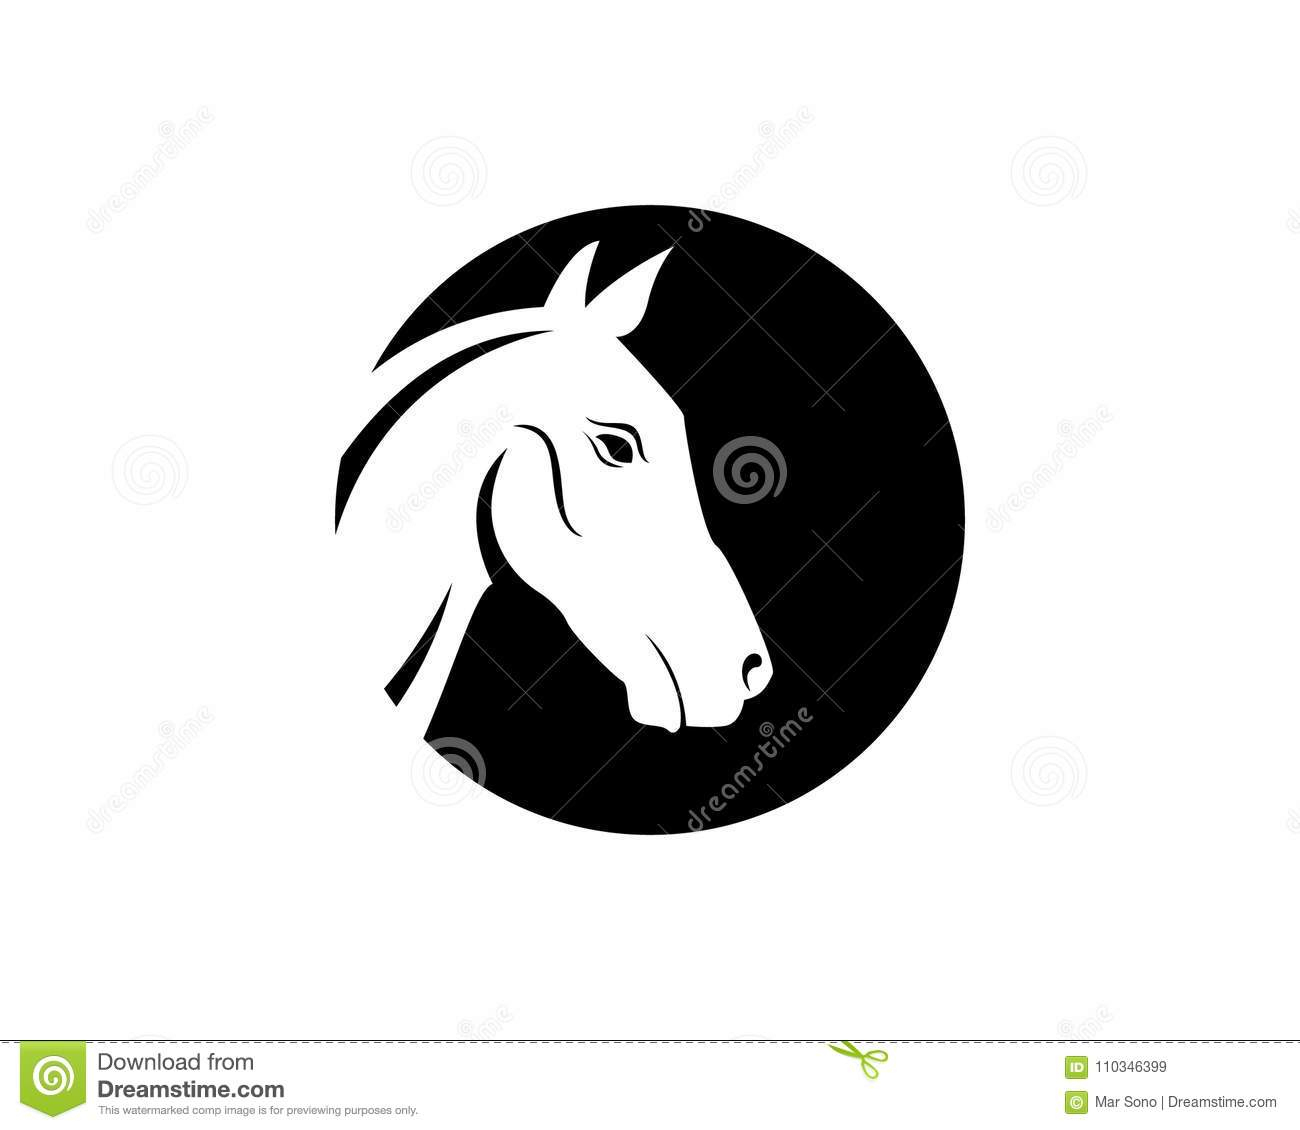 Pferdekopf-Logo Template Vector-Ikonen-App Vektor Abbildung bestimmt für Pferdekopf Vorlage